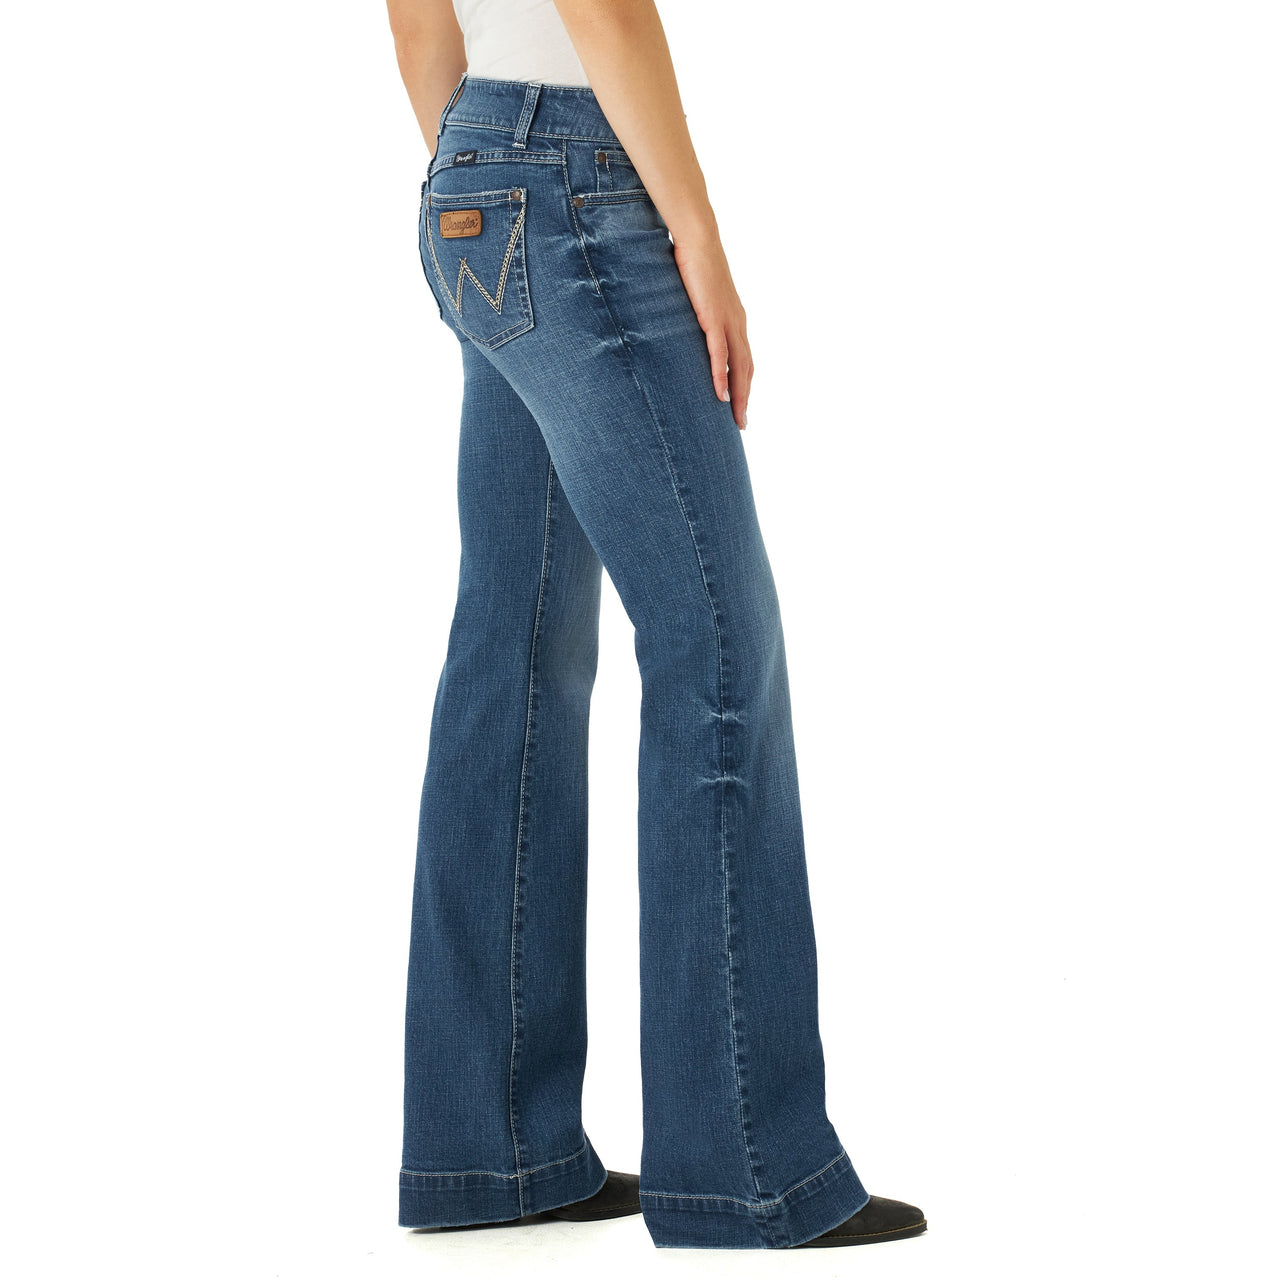 Wrangler Women's Retro Mae Mid Rise Trouser Jeans - Medium Wash